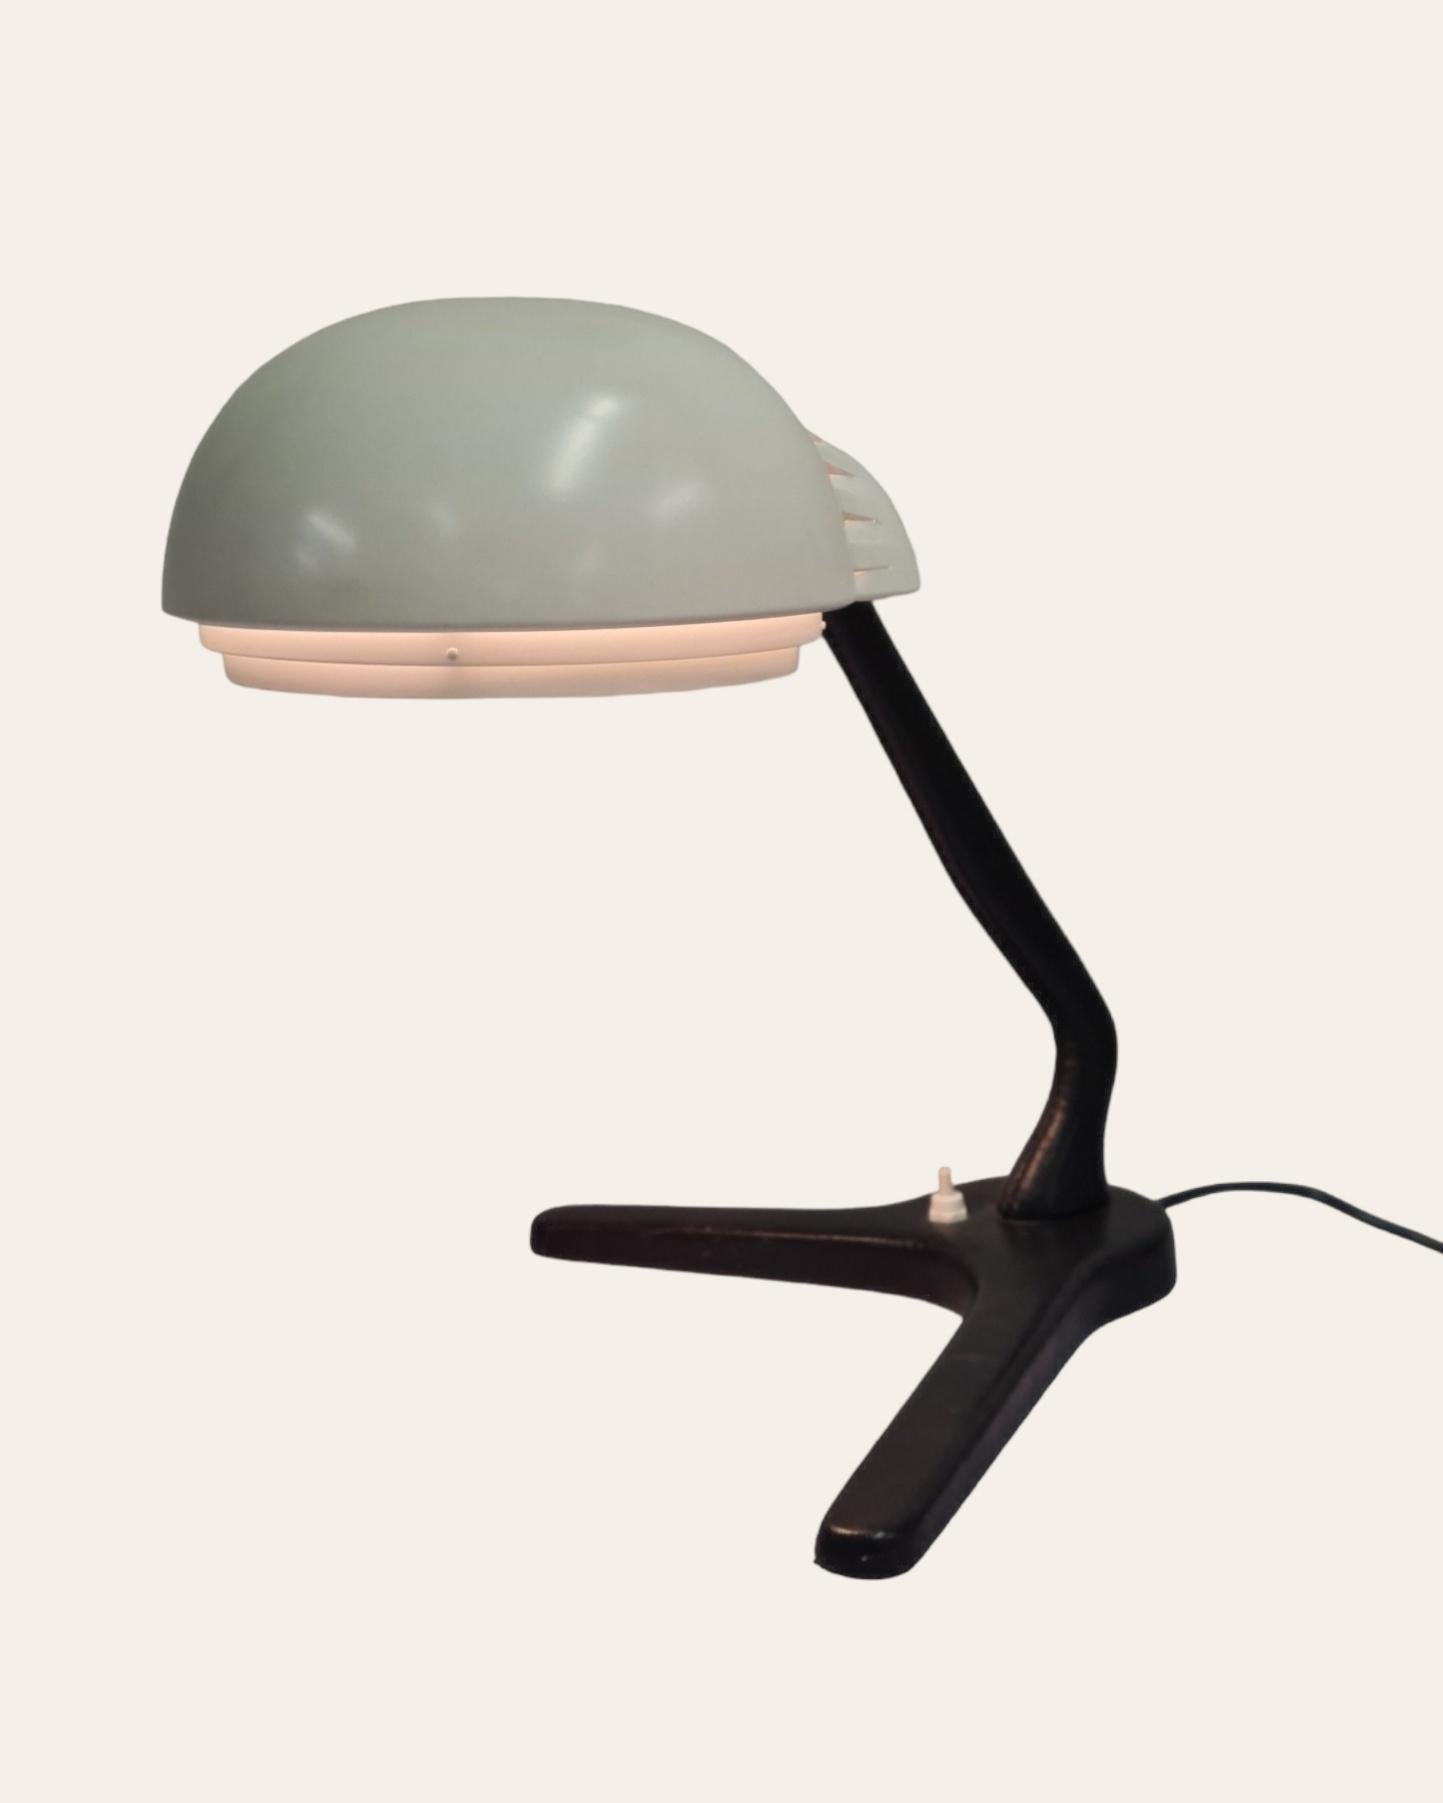 Scandinavian Modern Alvar Aalto Table Lamp Model A704, 1950s Valaistustyö Ky For Sale